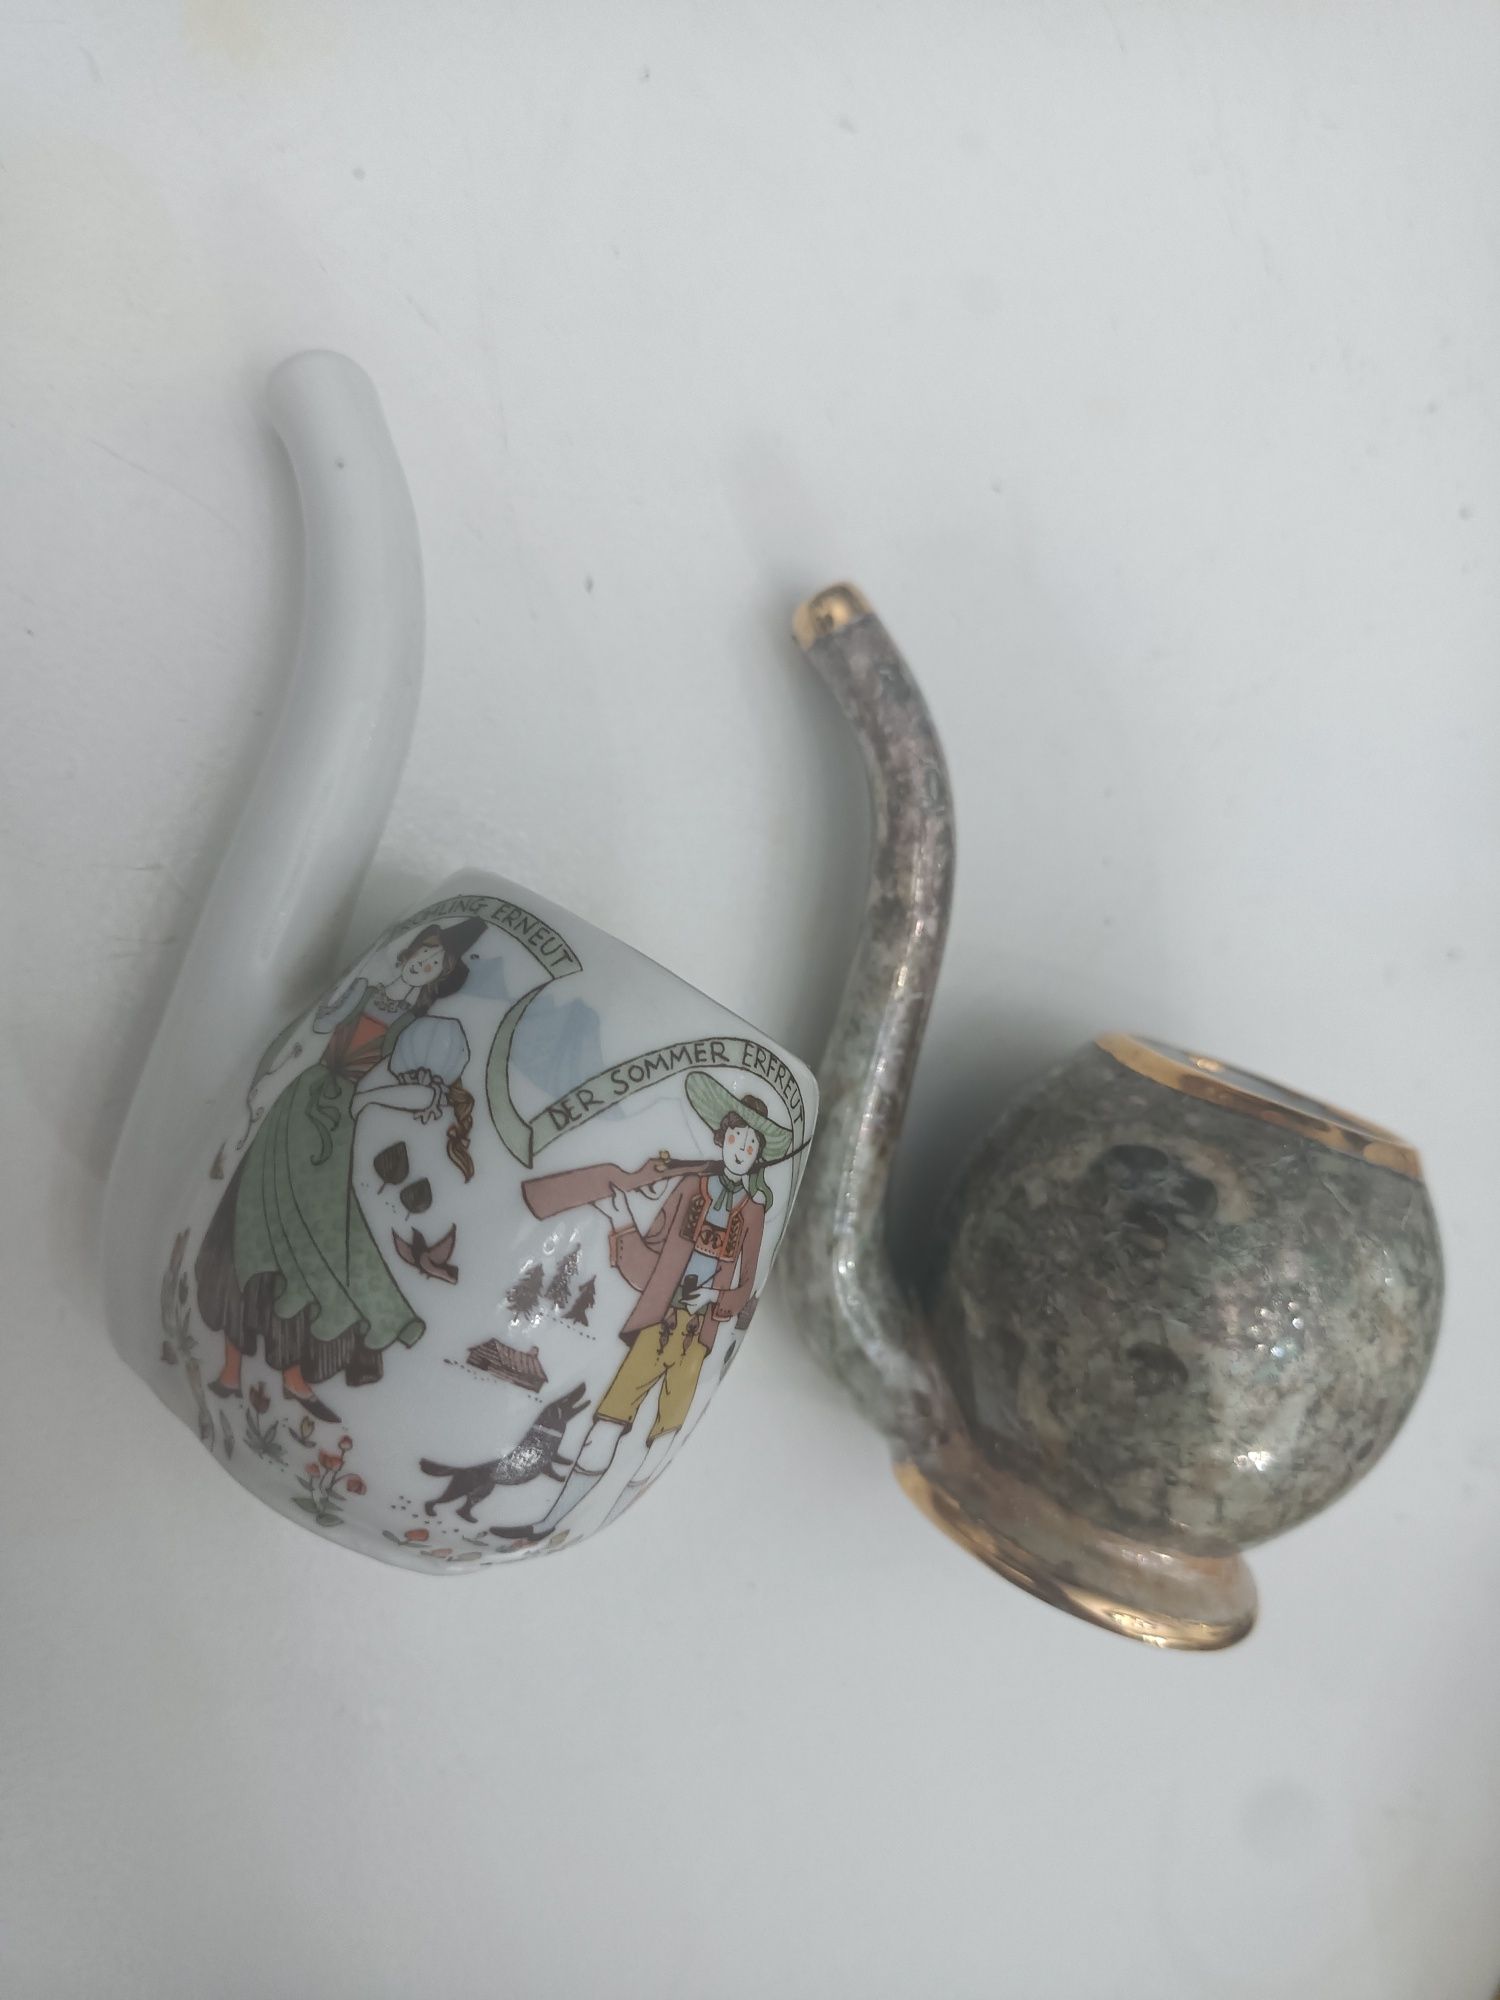 Stare fajki z porcelany z sygnaturami